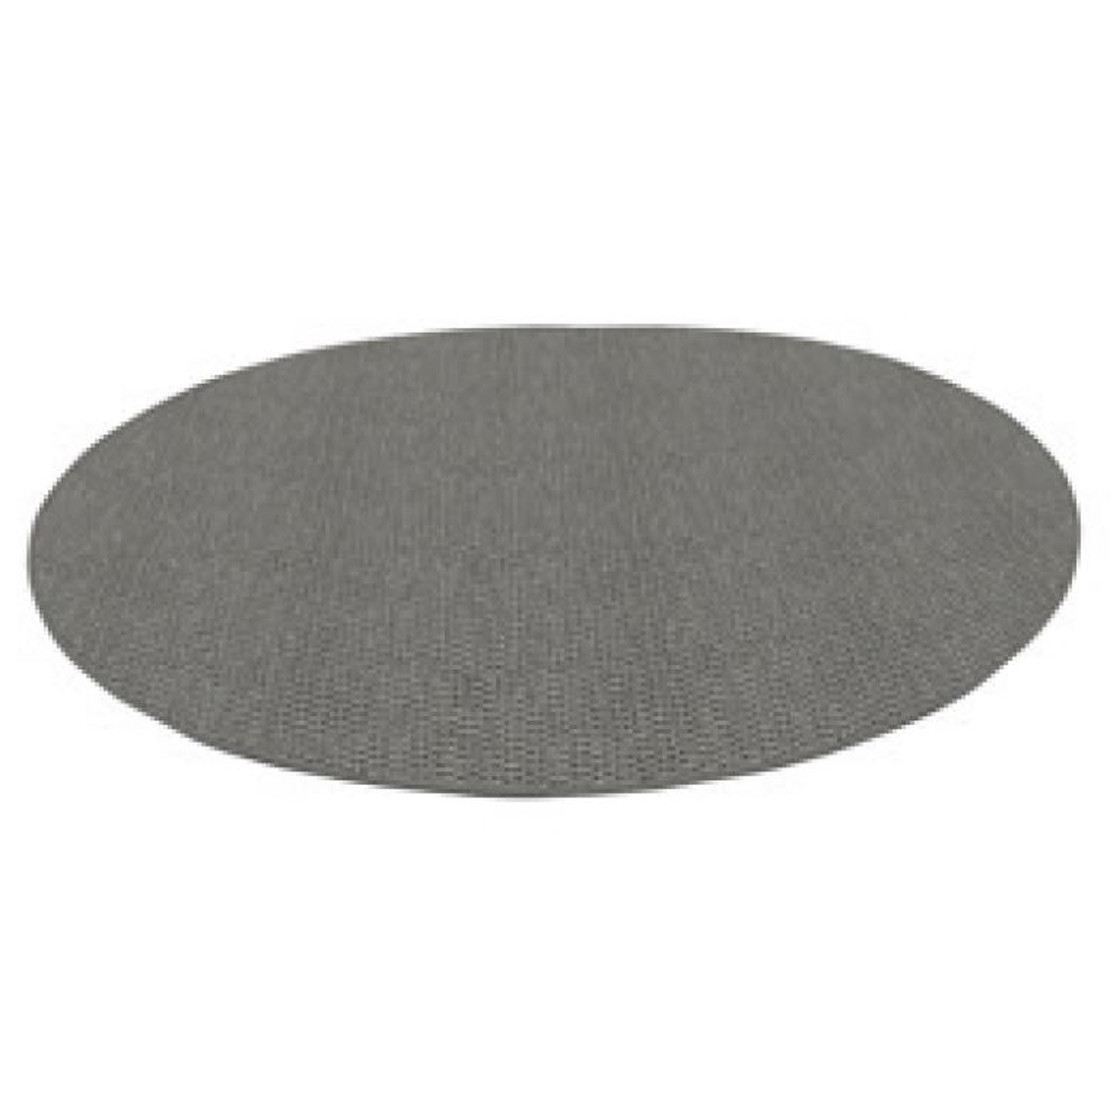 Outdoor rug 150 cm. Round Anthracite